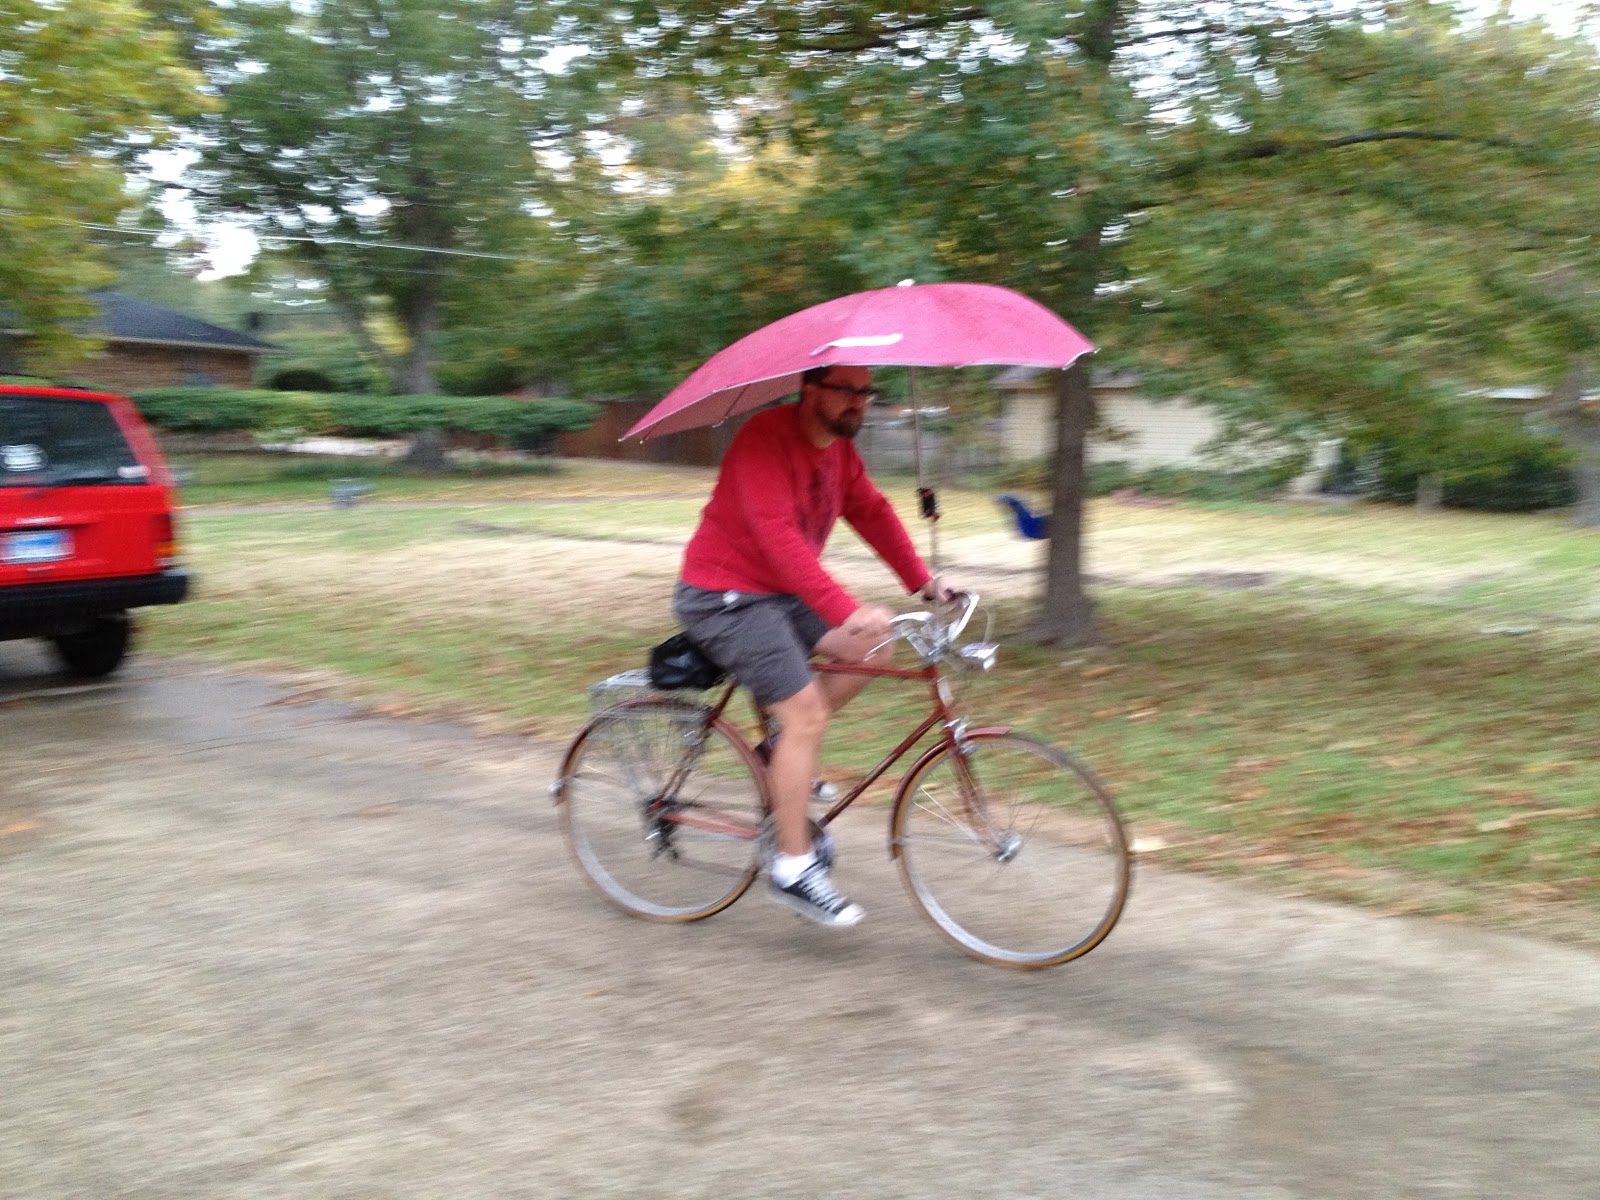 The Plano Cyclist Using The Uberhood Bicycle Umbrella In The Rain